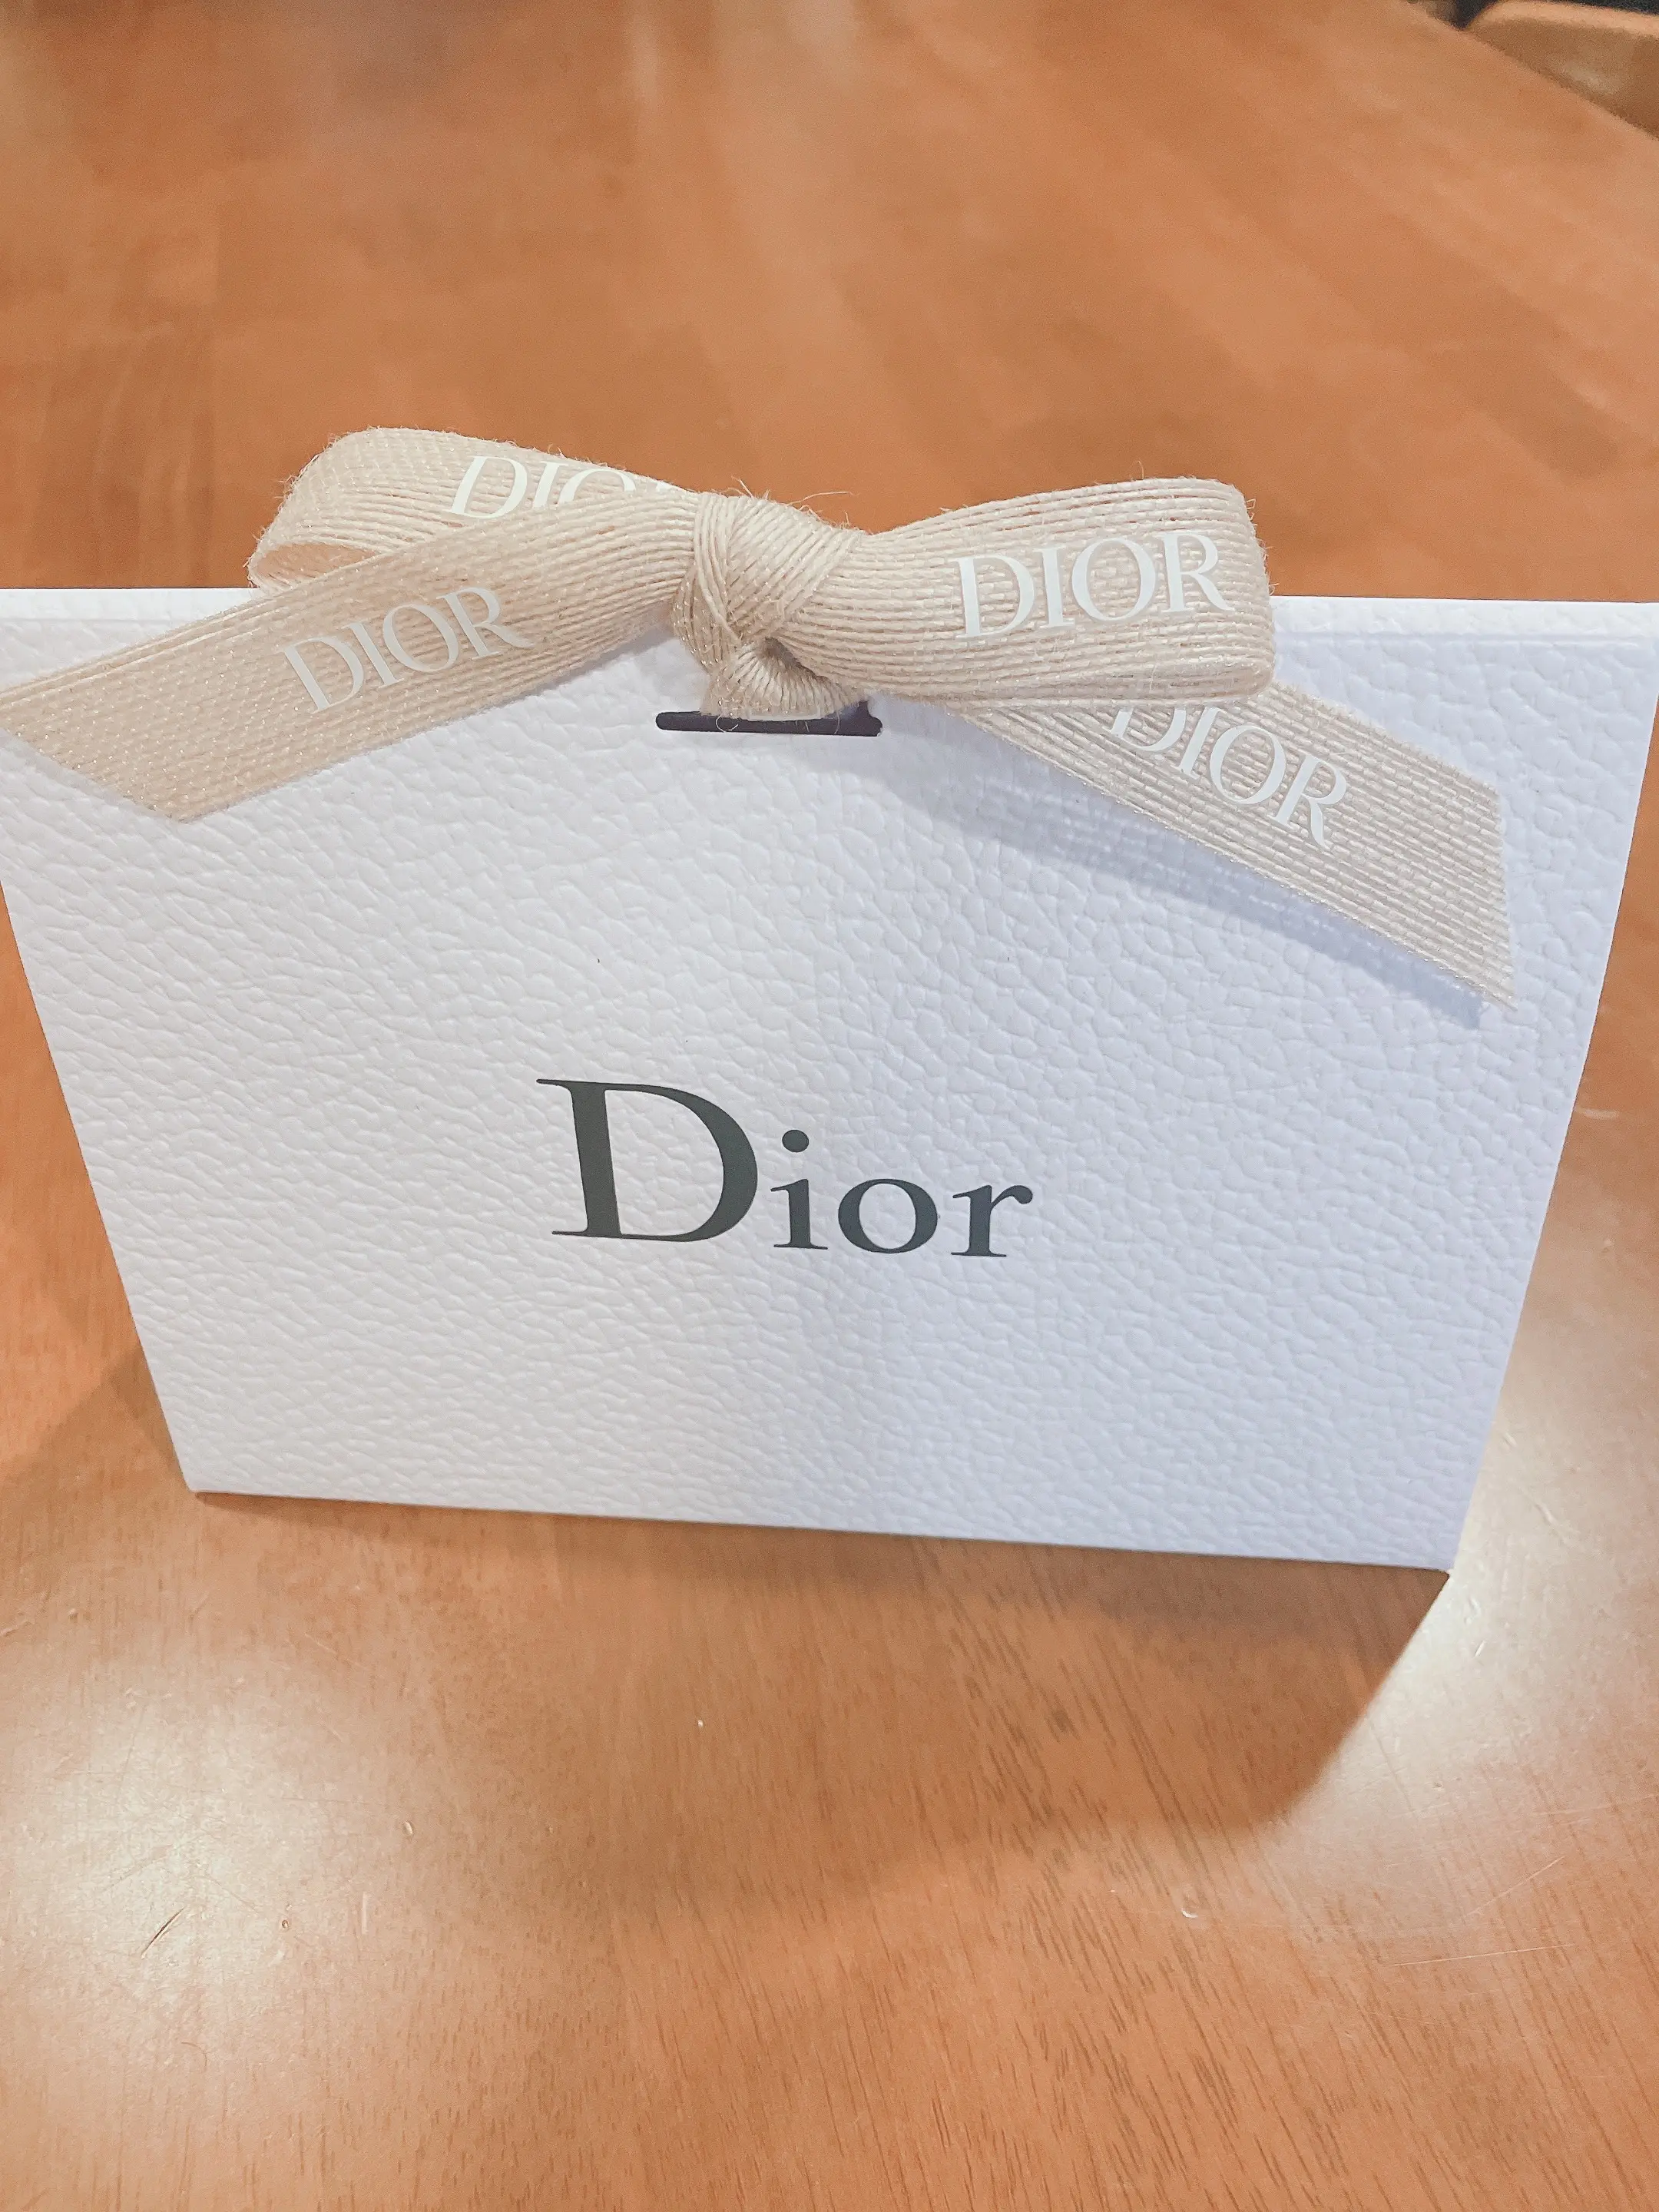 Dior リキッドルージュ❤︎_1_1-1